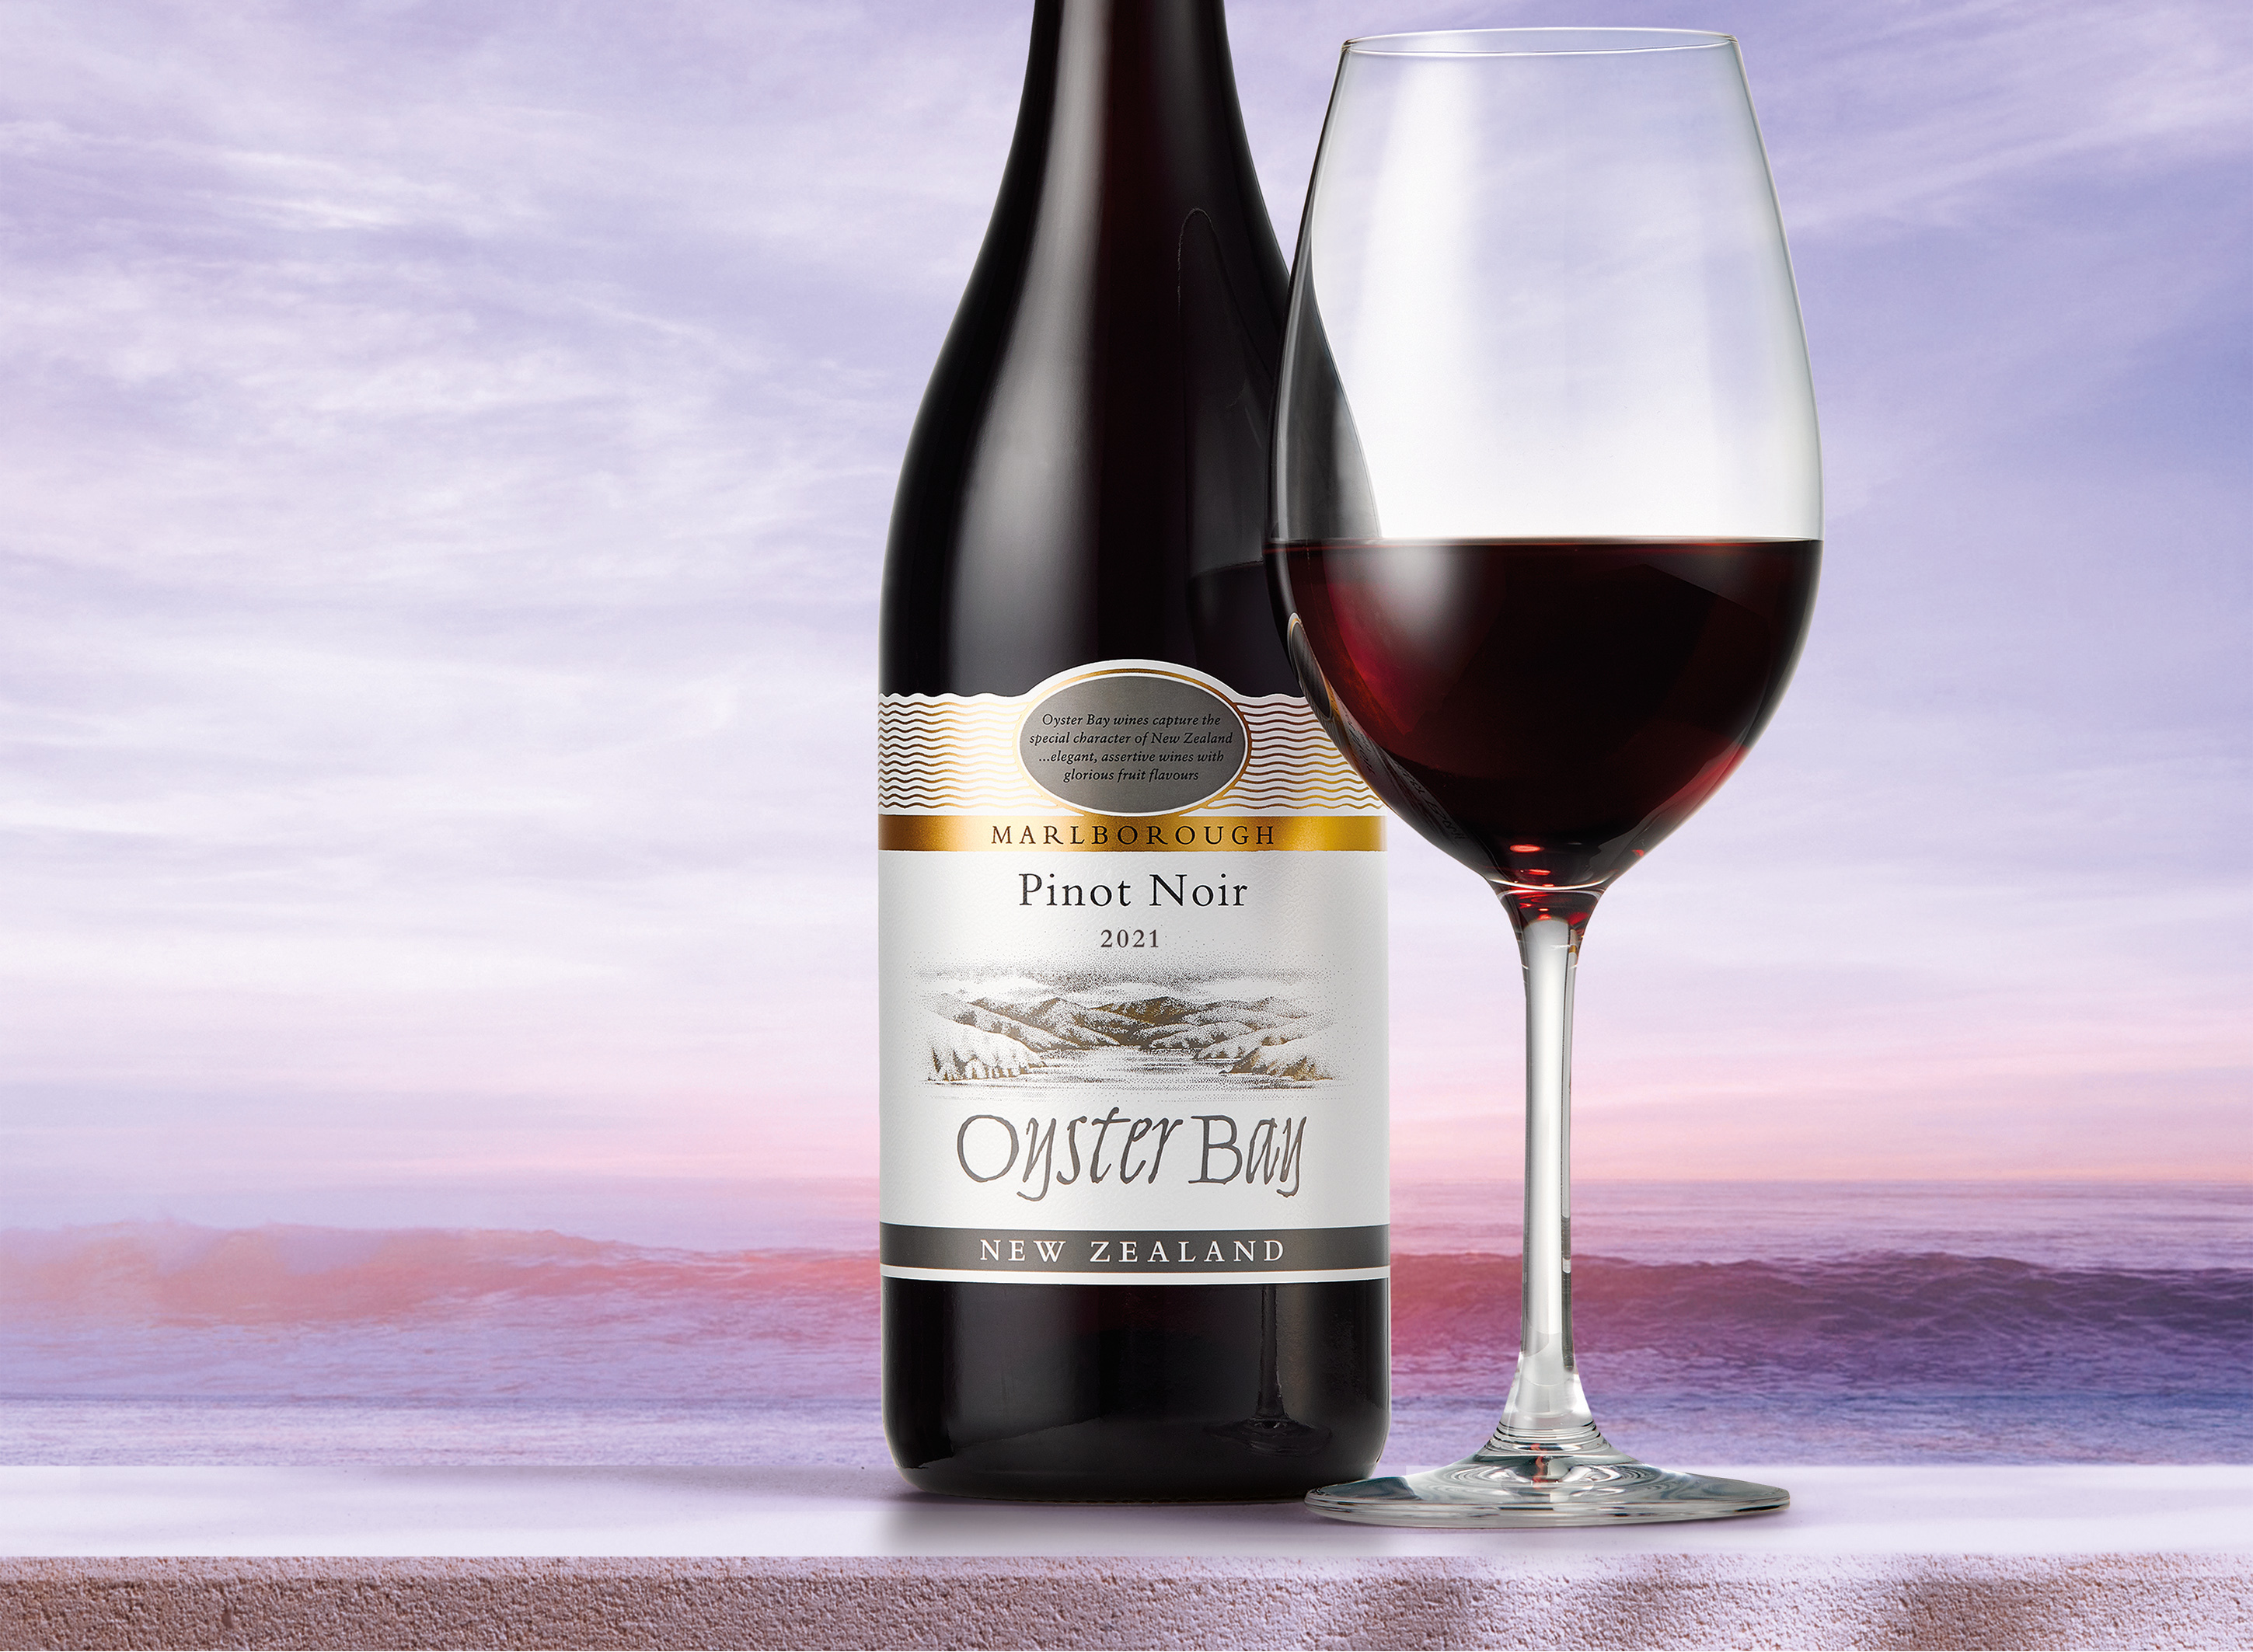 Oyster Bay Marlborough New Zealand Pinot Noir Wine bottle next to full glass